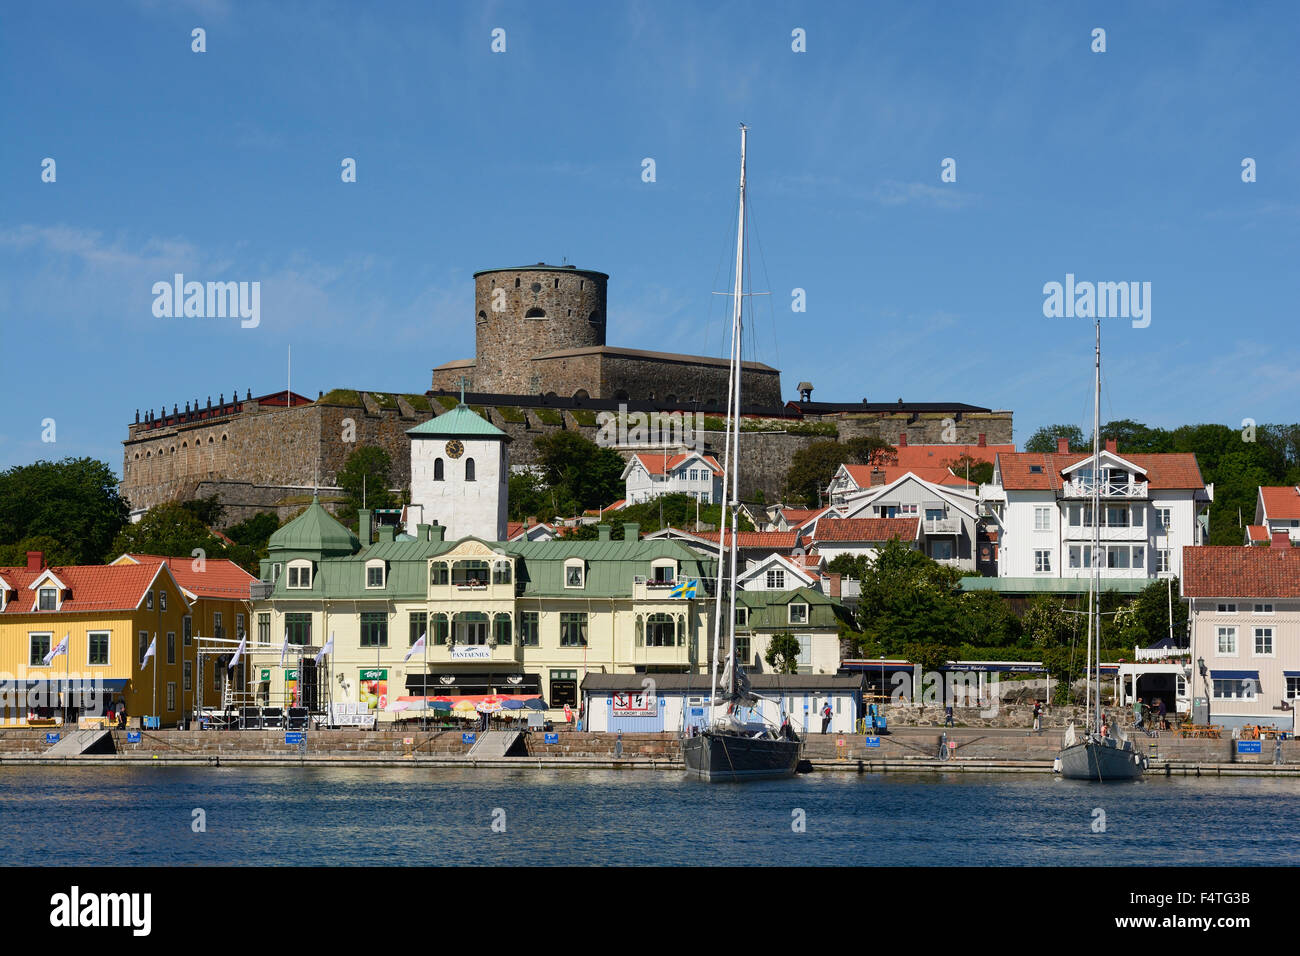 Marstrand, city, Karlstens fortification, fortification, sailing boats, Göteborg, Gotheburg, Skagerak, Sweden Stock Photo